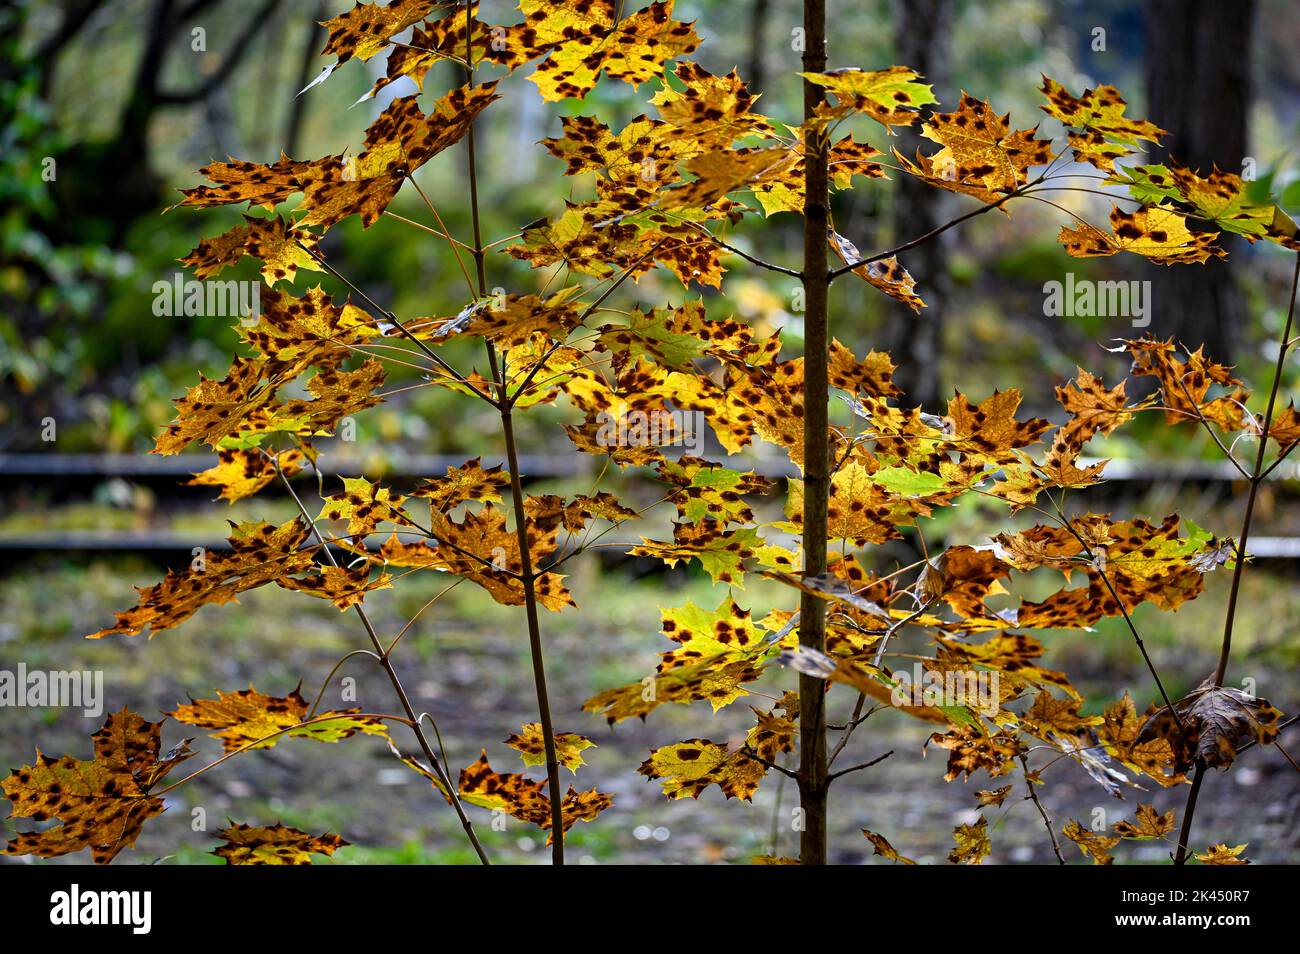 Rhytisma acerinum Tar spots on maple leaves Stock Photo